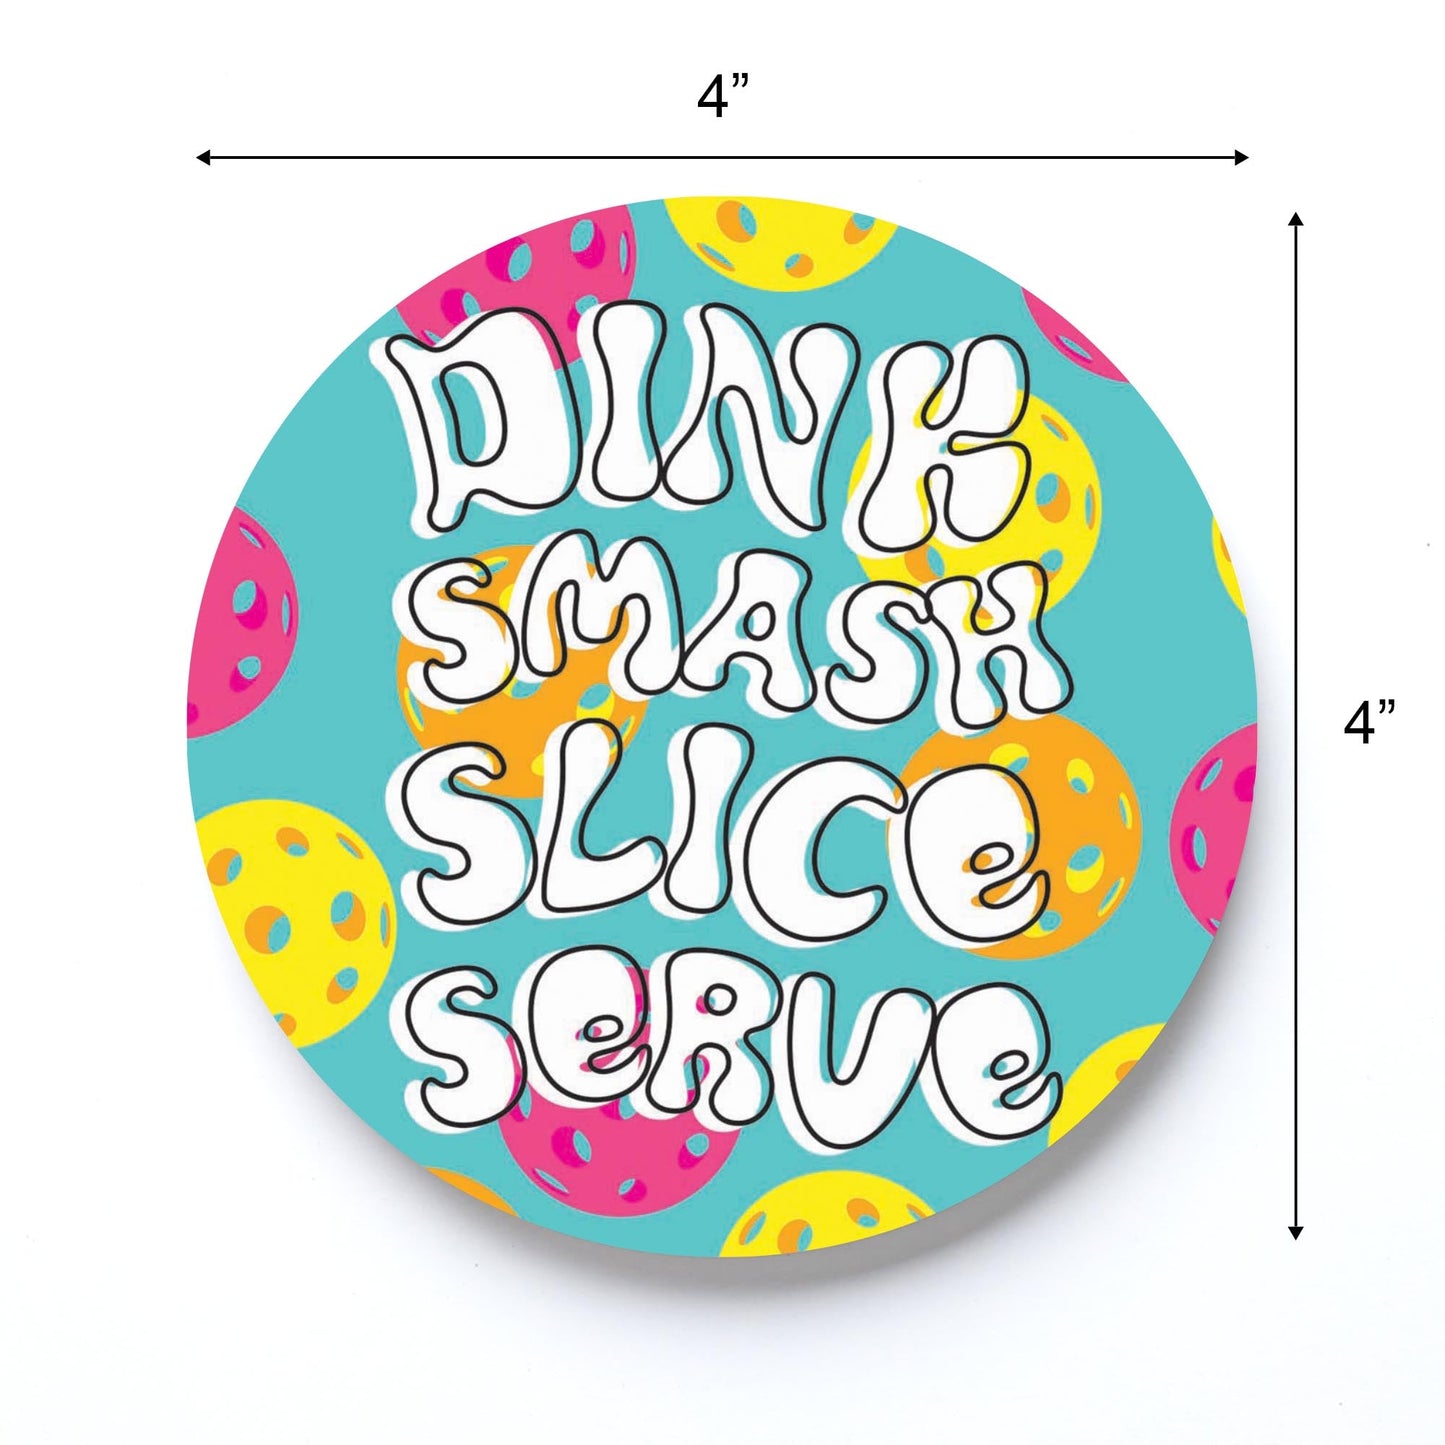 Neon Pickleball Dinnk Smash Slice Serve | 4x4